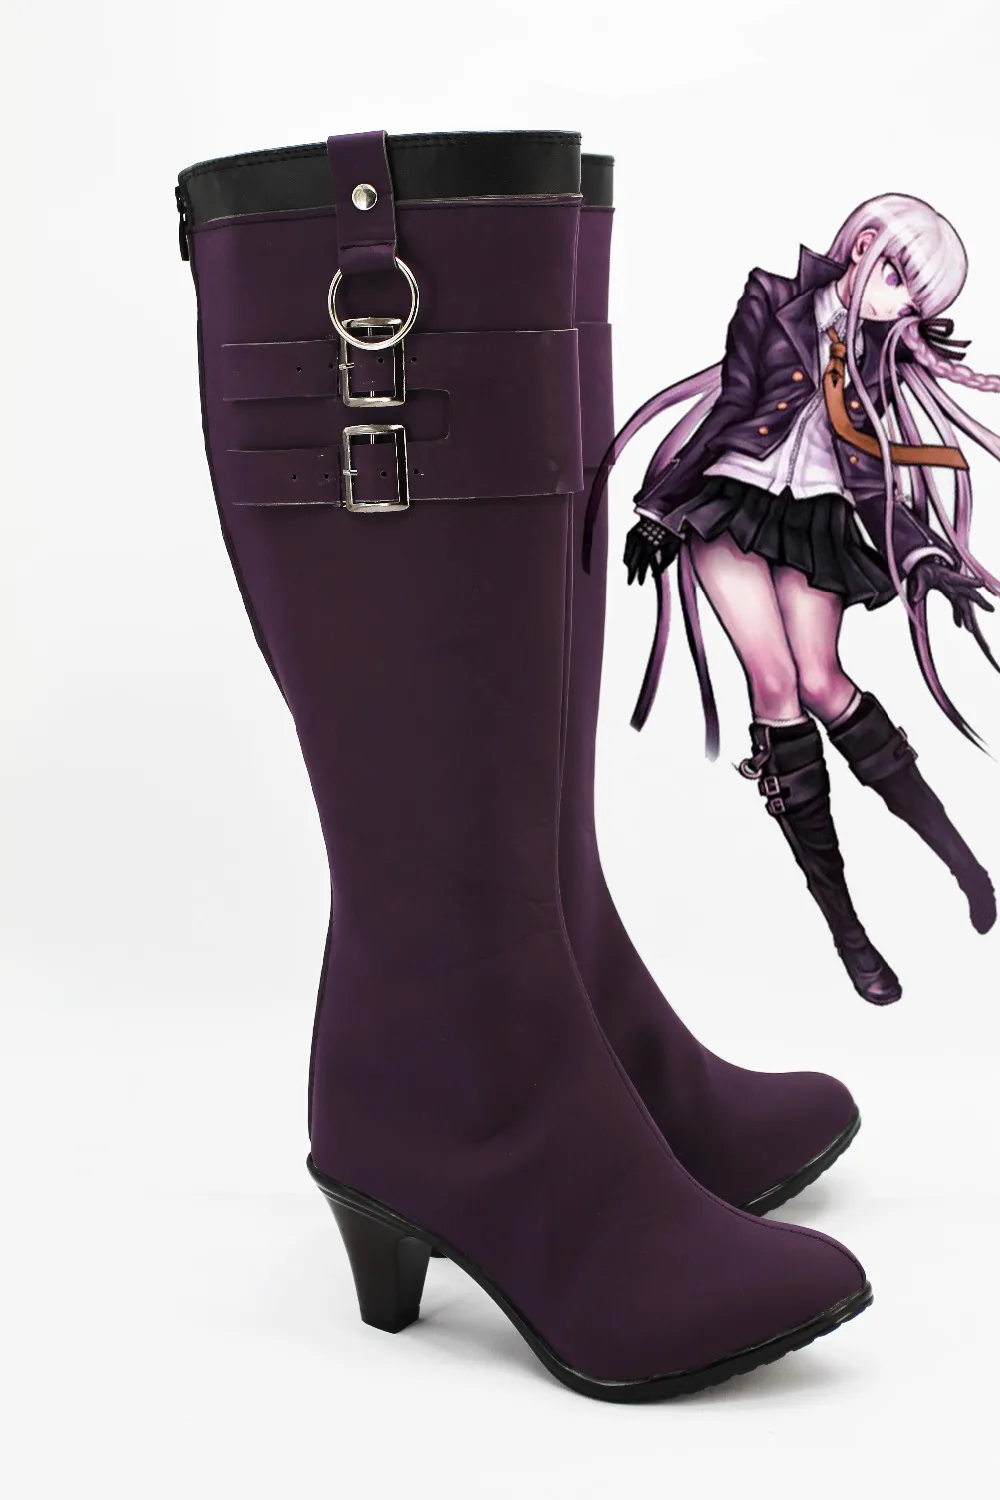 DanganRonpa Dangan Ronpa kyouko/KyoKo Kirigiri cosplay shoes boots For Costume Custom European Size